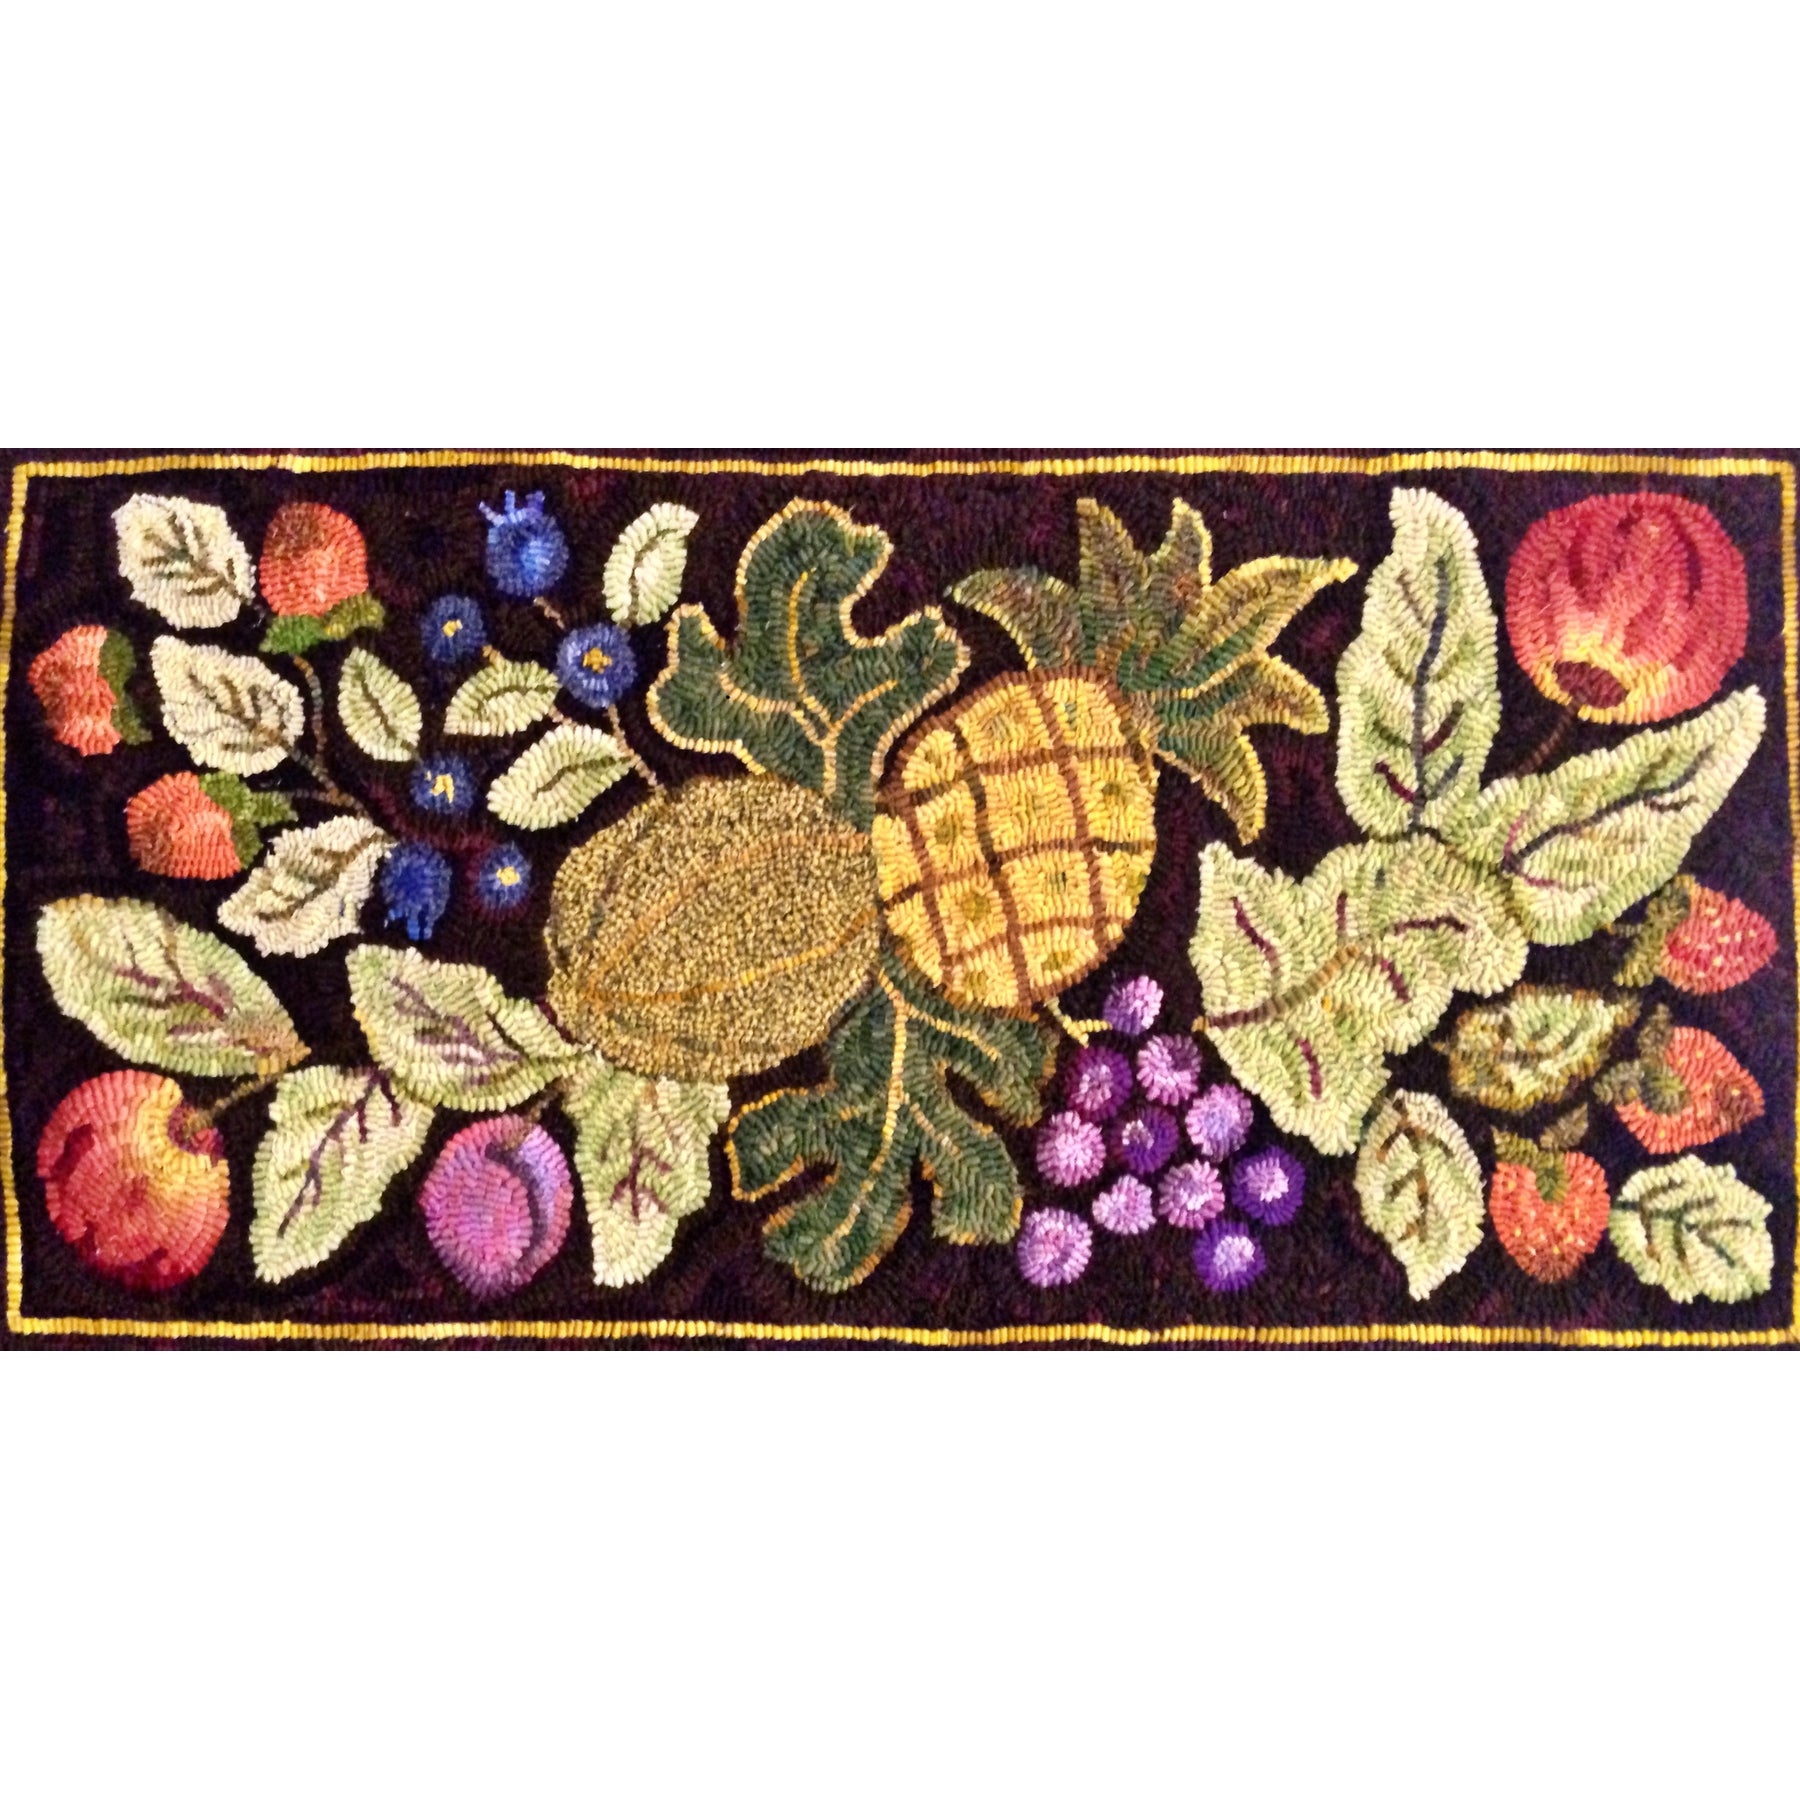 Primitive Fruit, rug hooked by Paula Manning